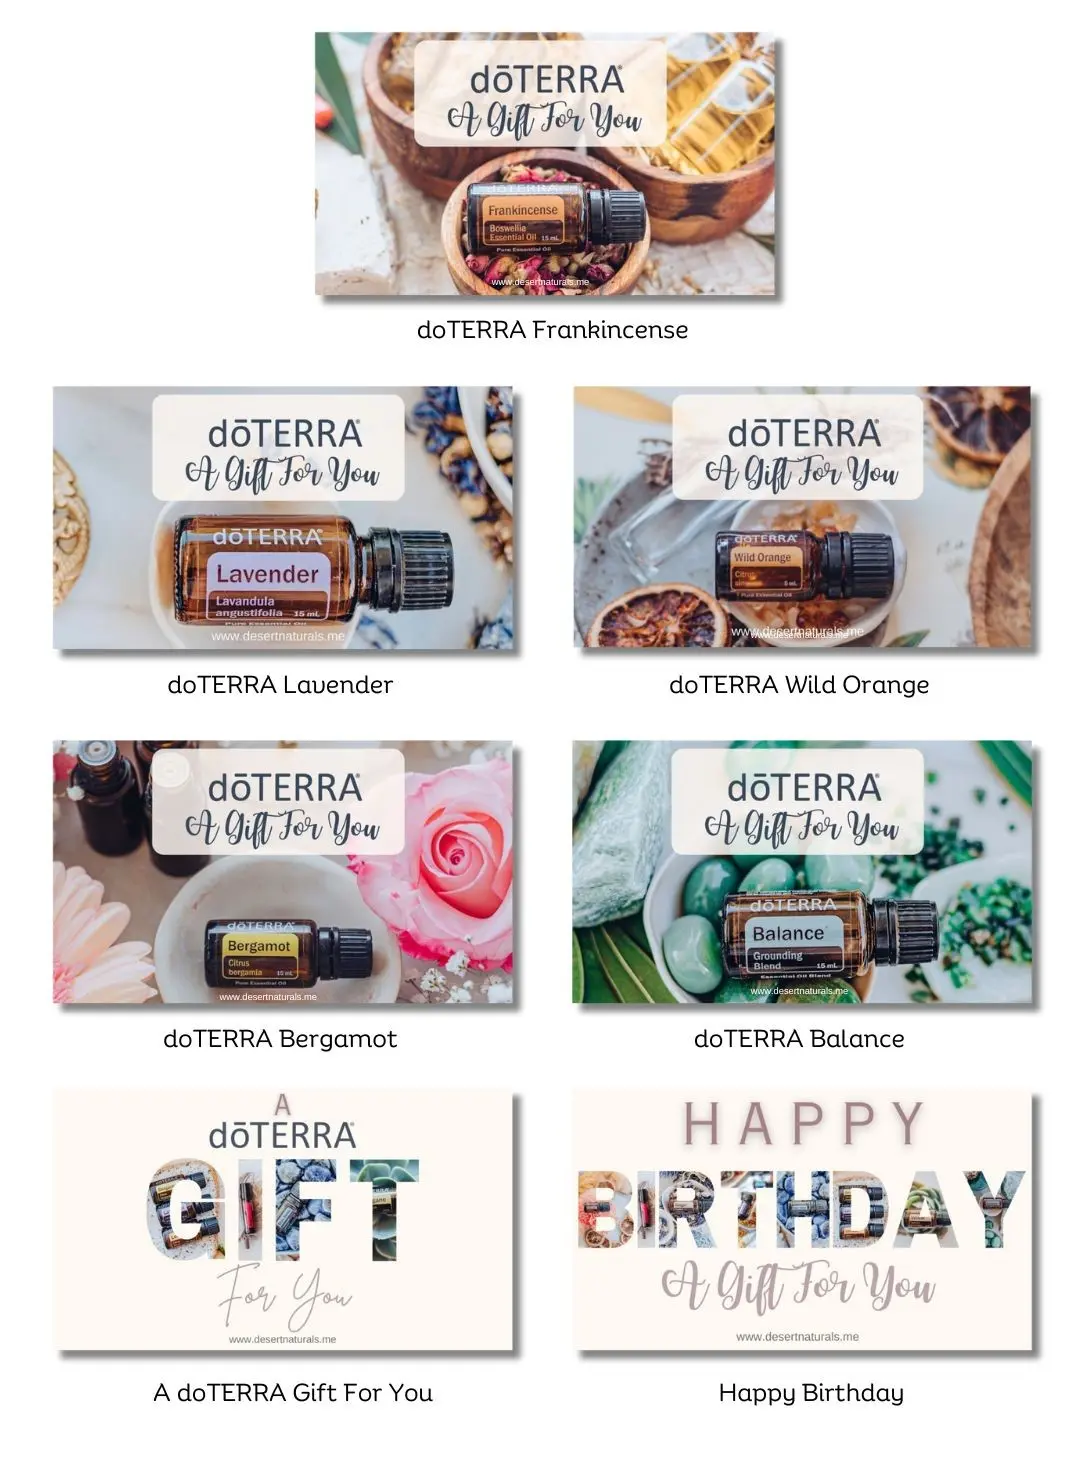 doterra gift card designs mockup